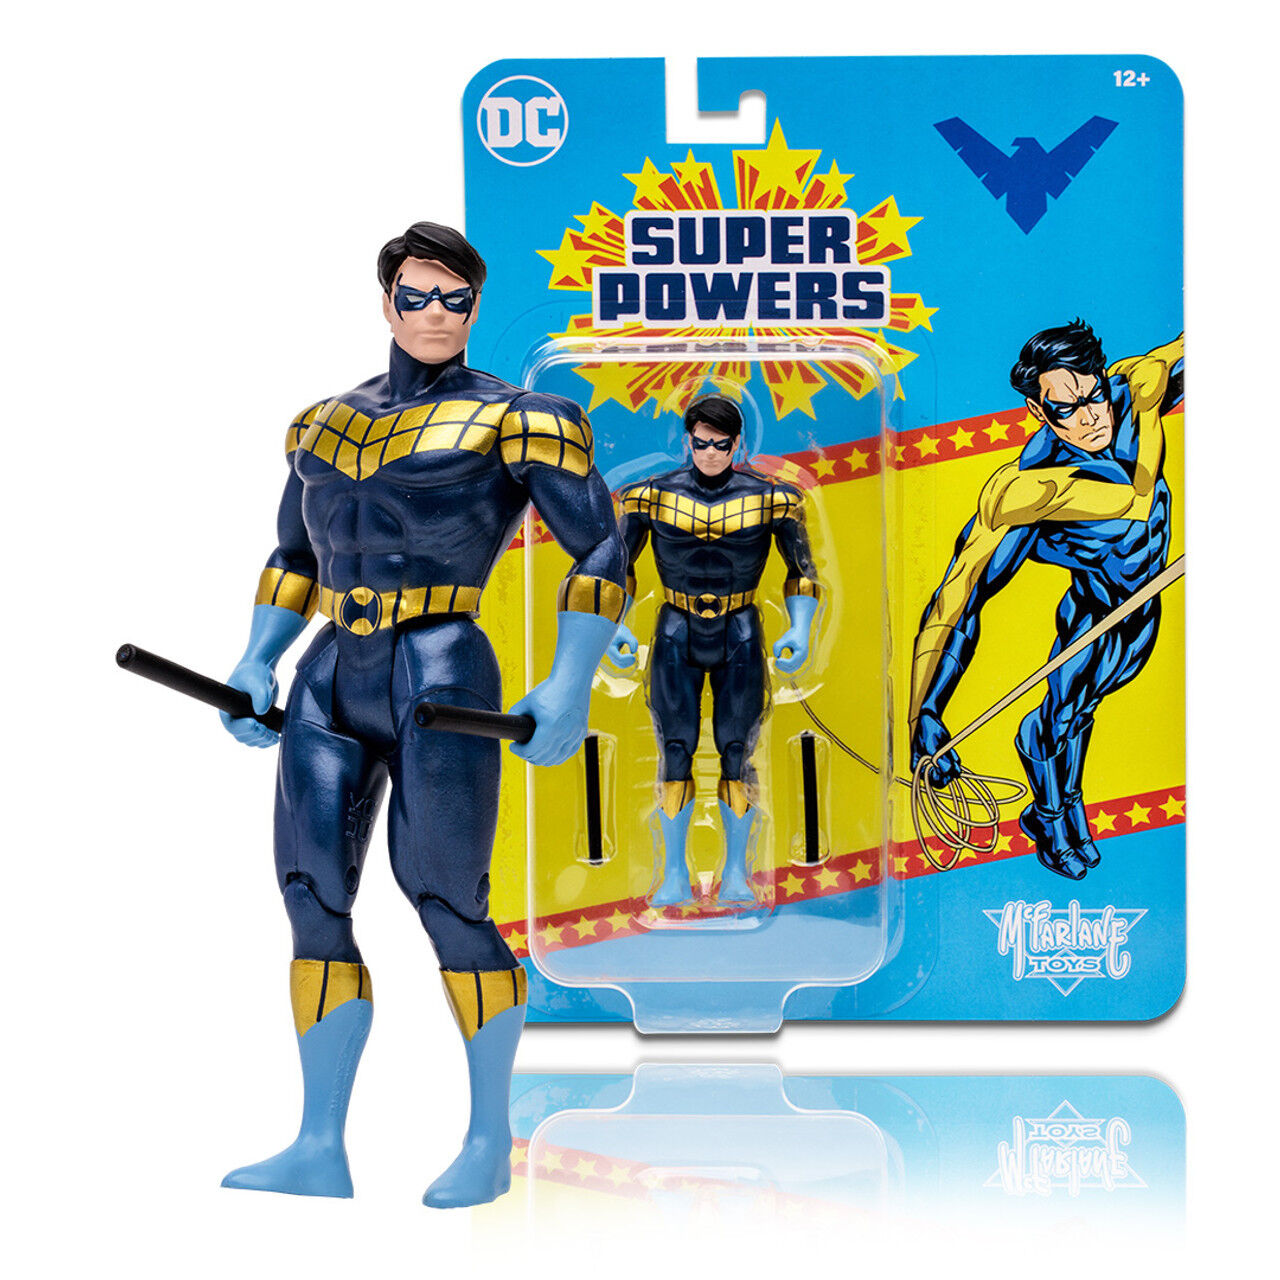 Mcfarlane Toys Dc Super Powers: Nightwing (Knightfall) 4-Inch Figure